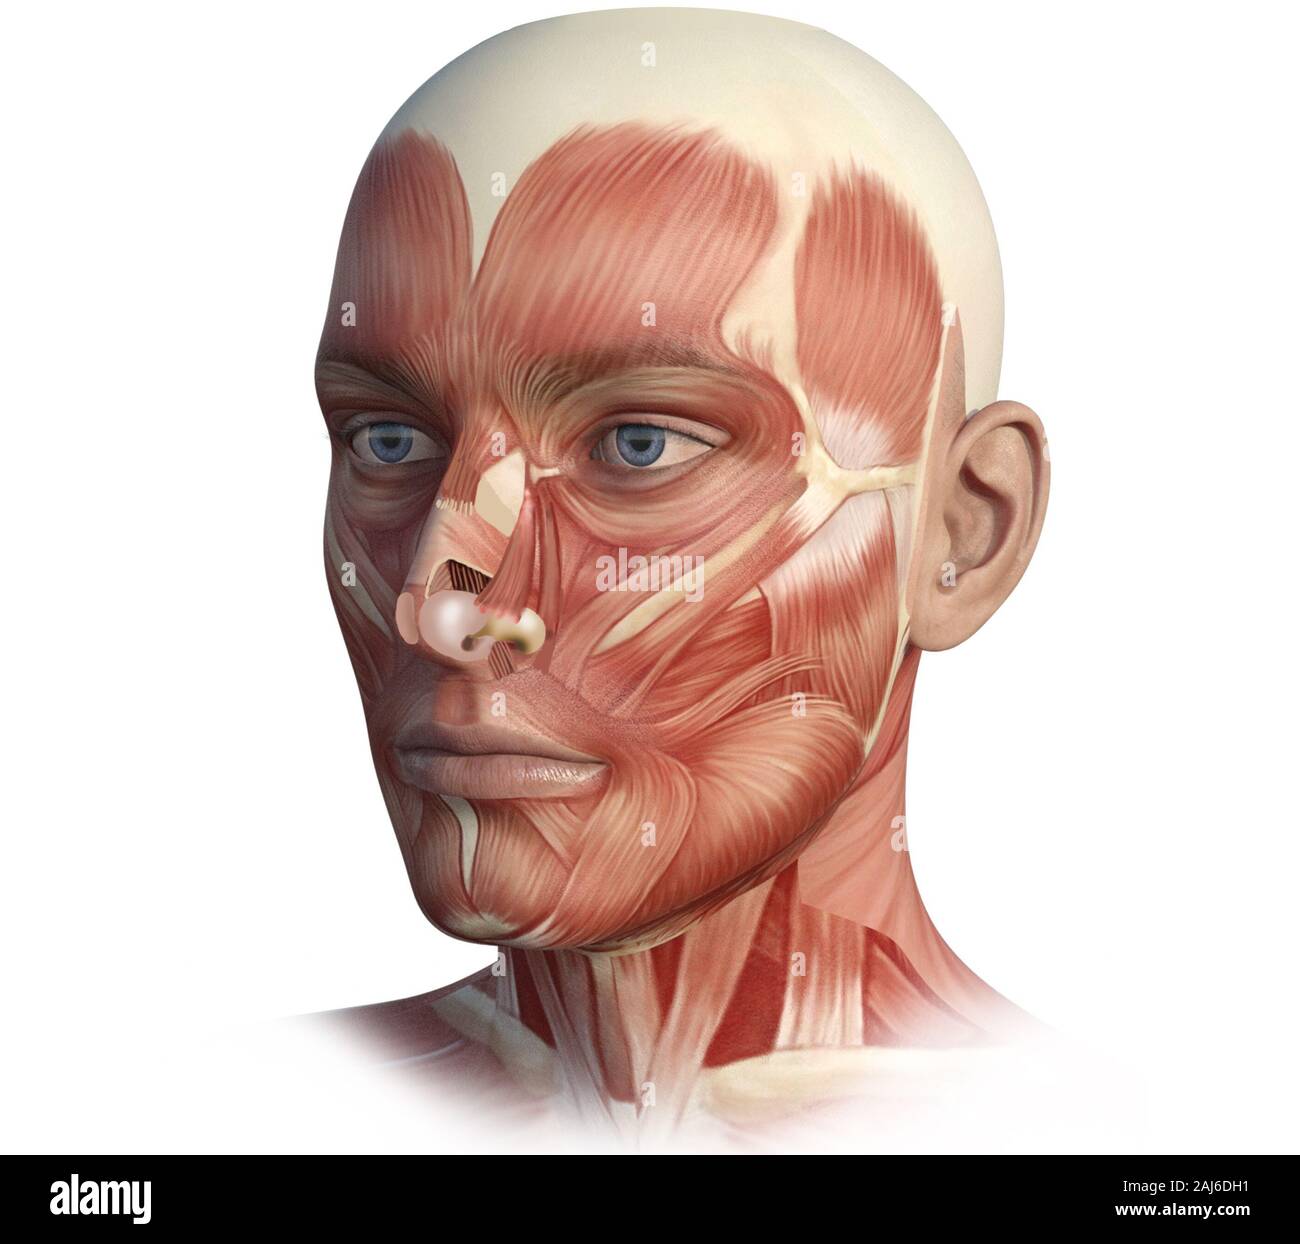 Face, head, anatomy digital illustration Stock Photo